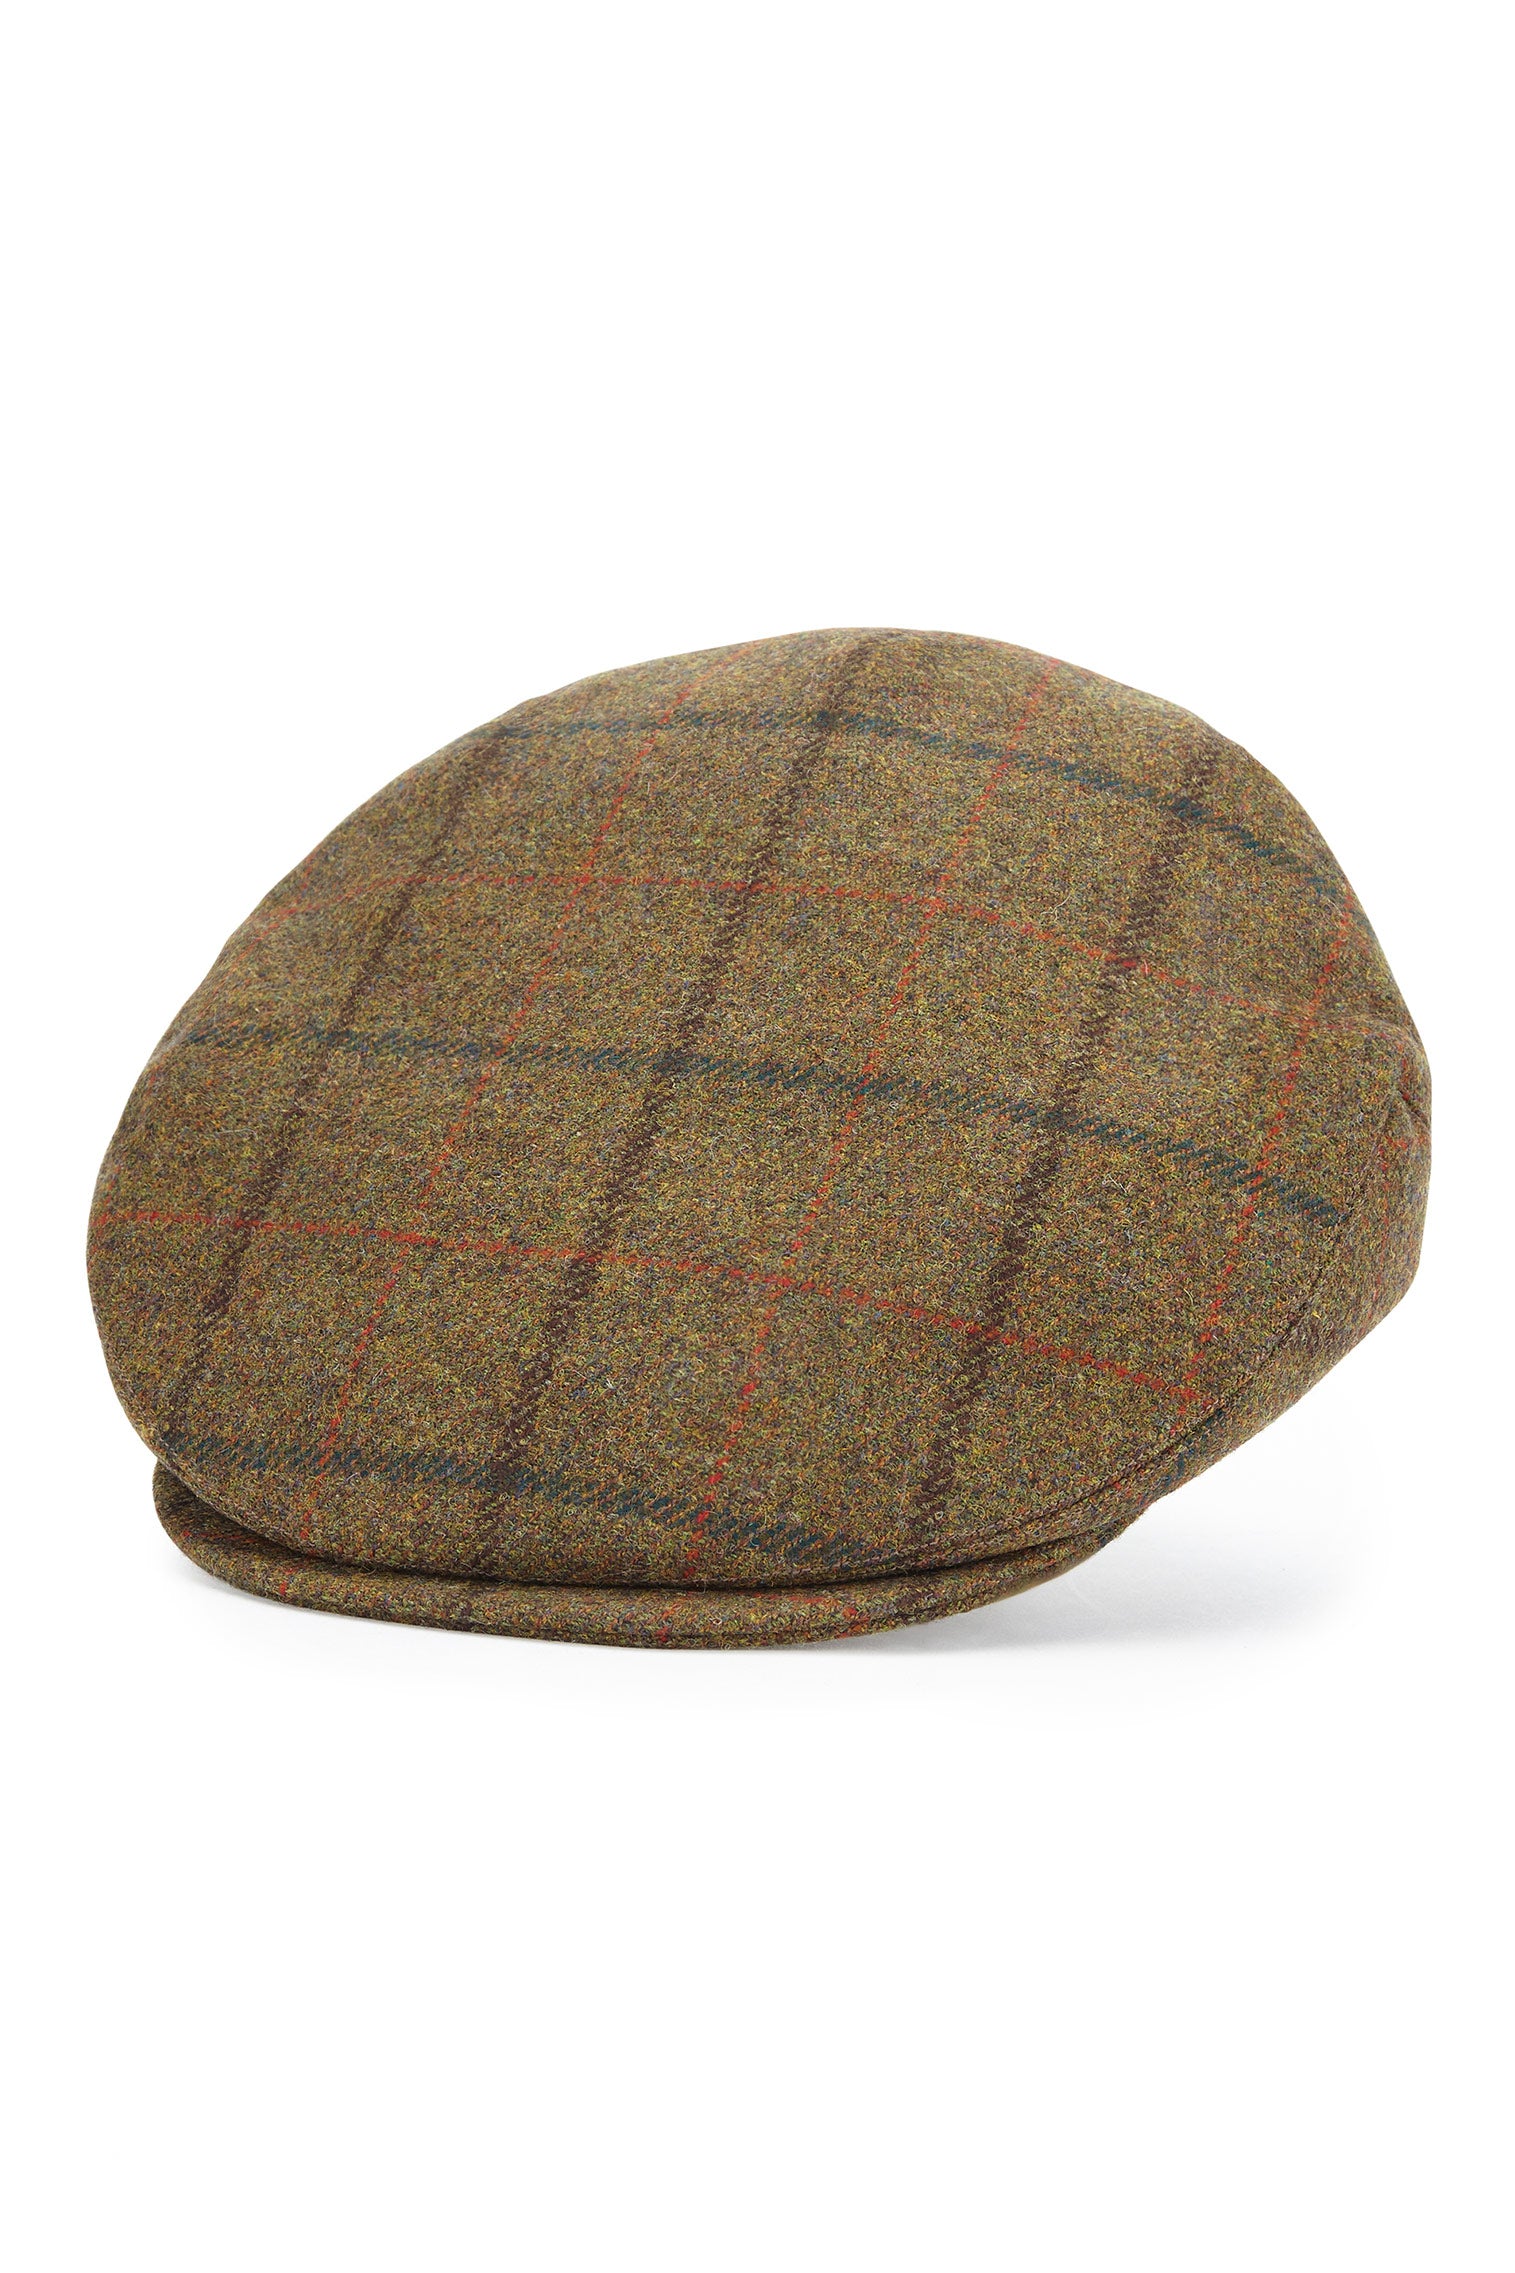 Turnberry Tweed Flat Cap - Men's Flat Caps - Lock & Co. Hatters London UK